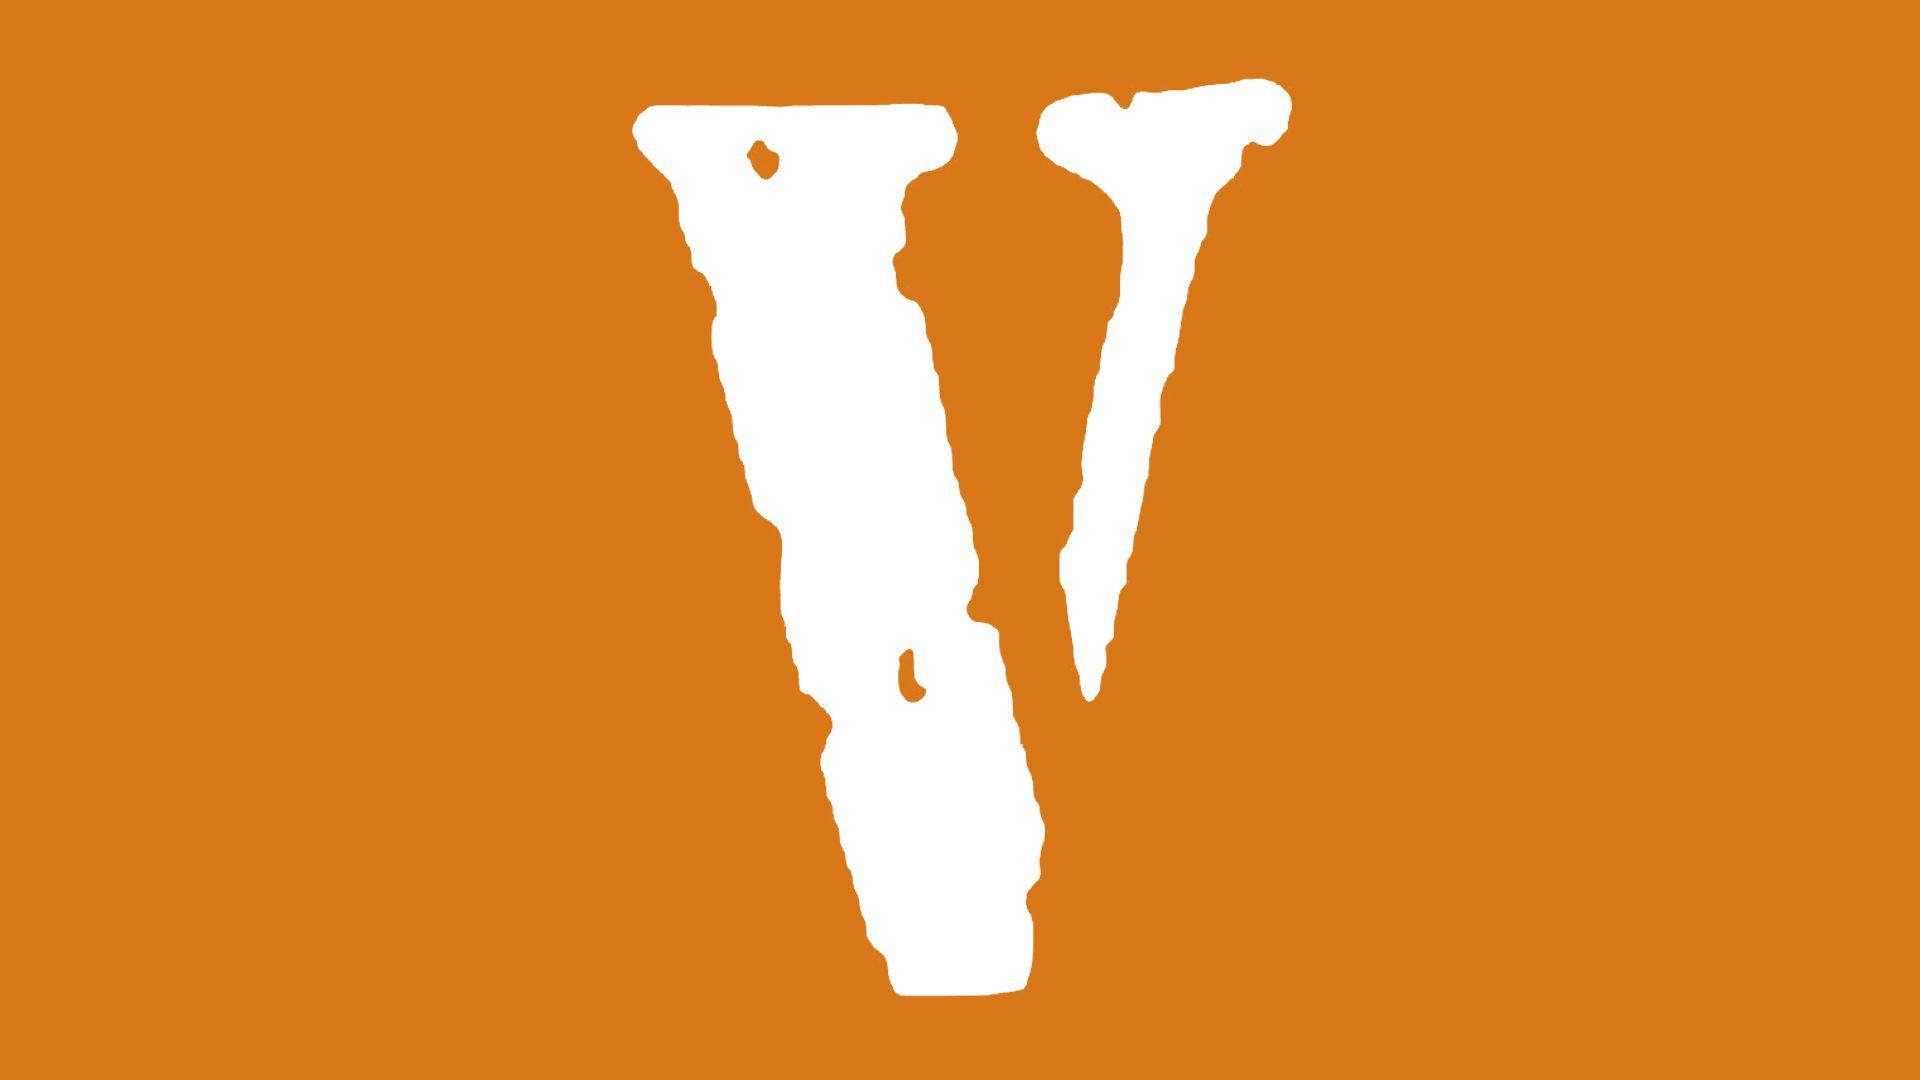 Vlone Drawings Logo - Vlone Logo, Vlone Symbol, Meaning, History and Evolution